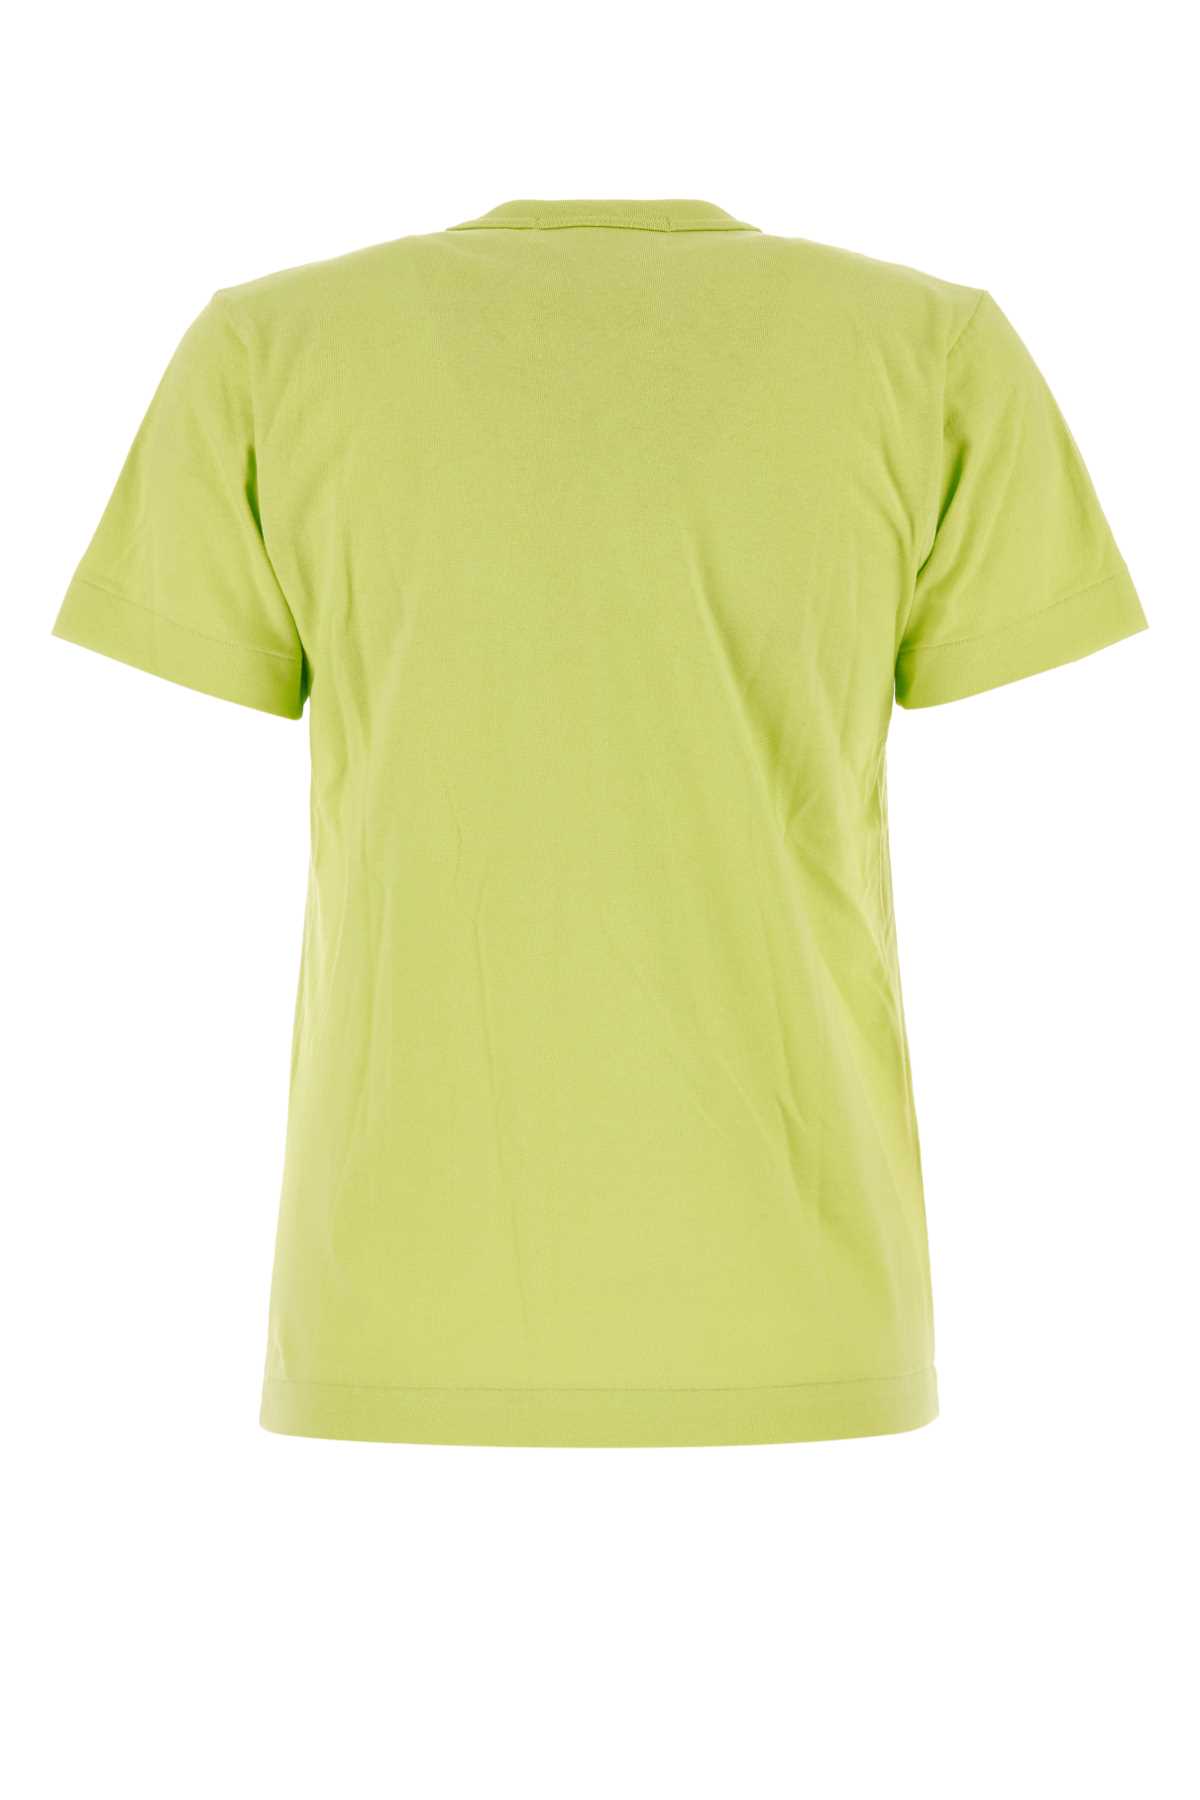 Comme Des Garçons Play Acid Green Cotton T-shirt